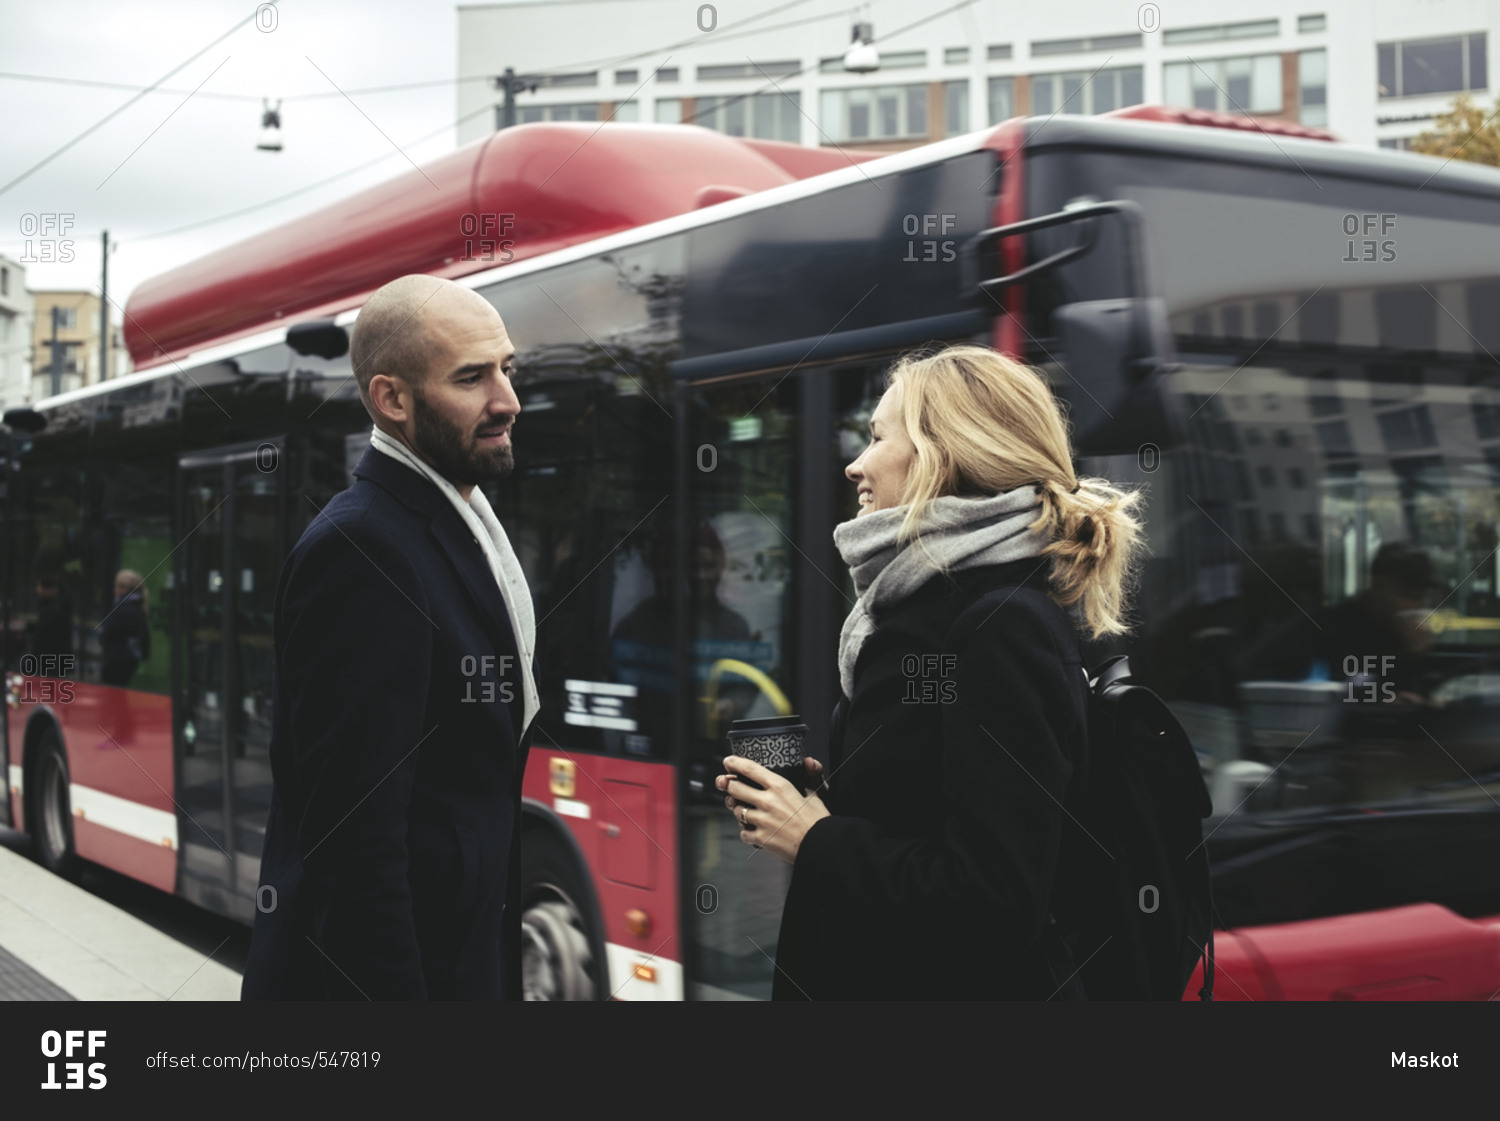 Business people talking on sidewalk by bus in city